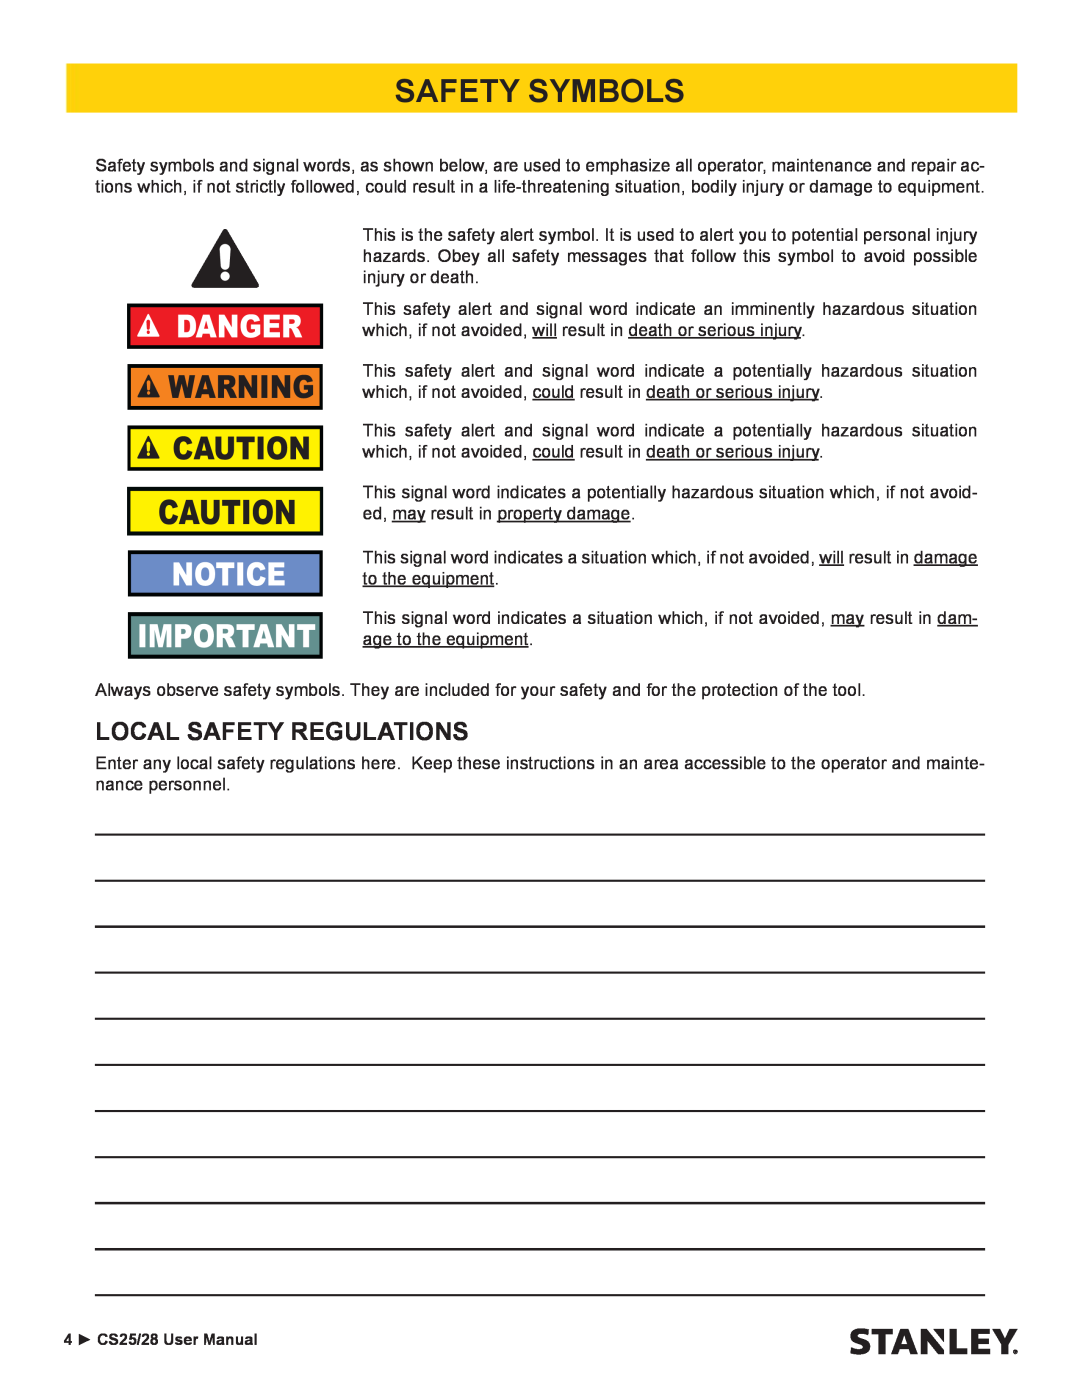 Stanley Black & Decker CS25/28 manual Safety Symbols, Local Safety Regulations, Danger 